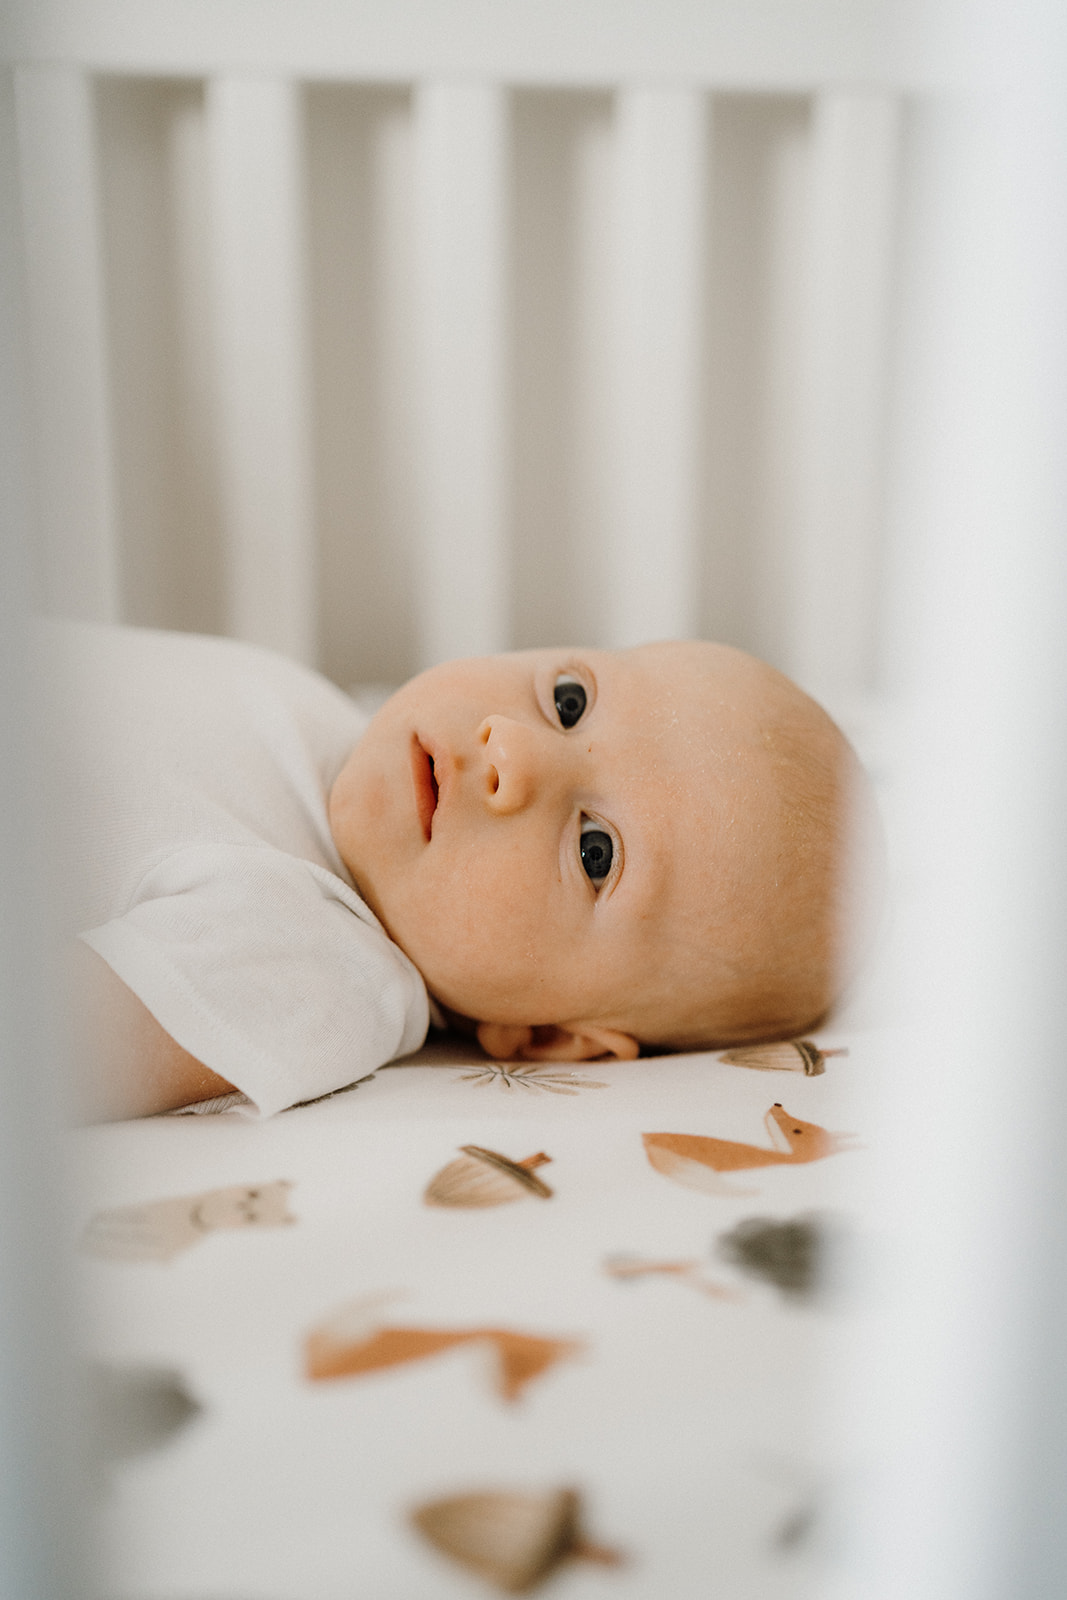 A close-up of a newborn lying in their crib.